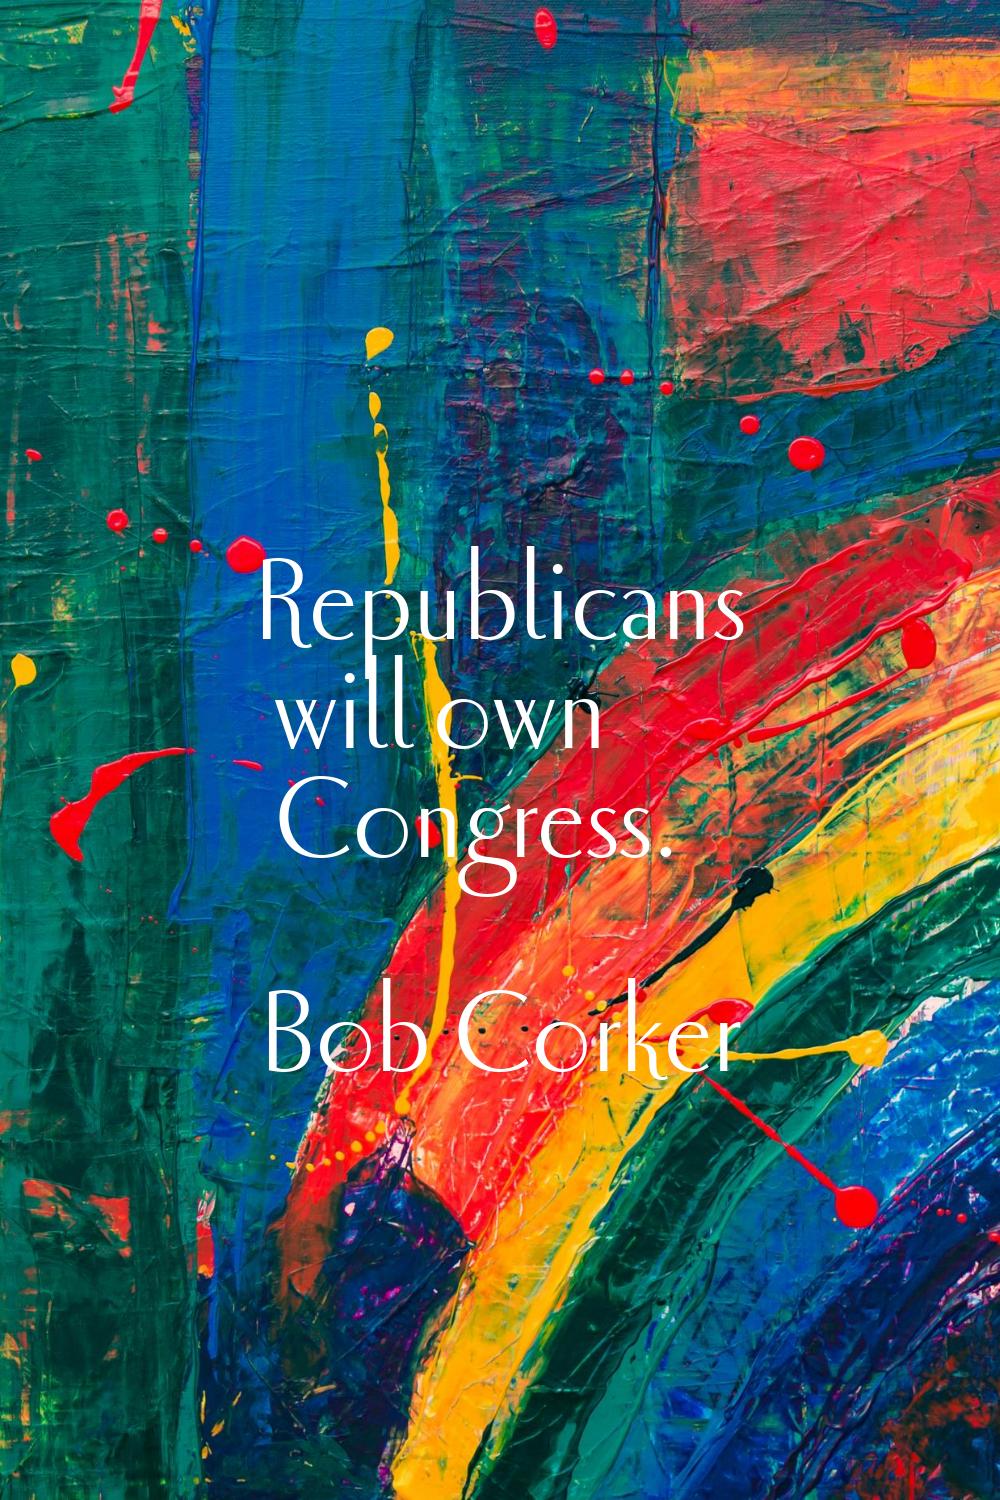 Republicans will own Congress.